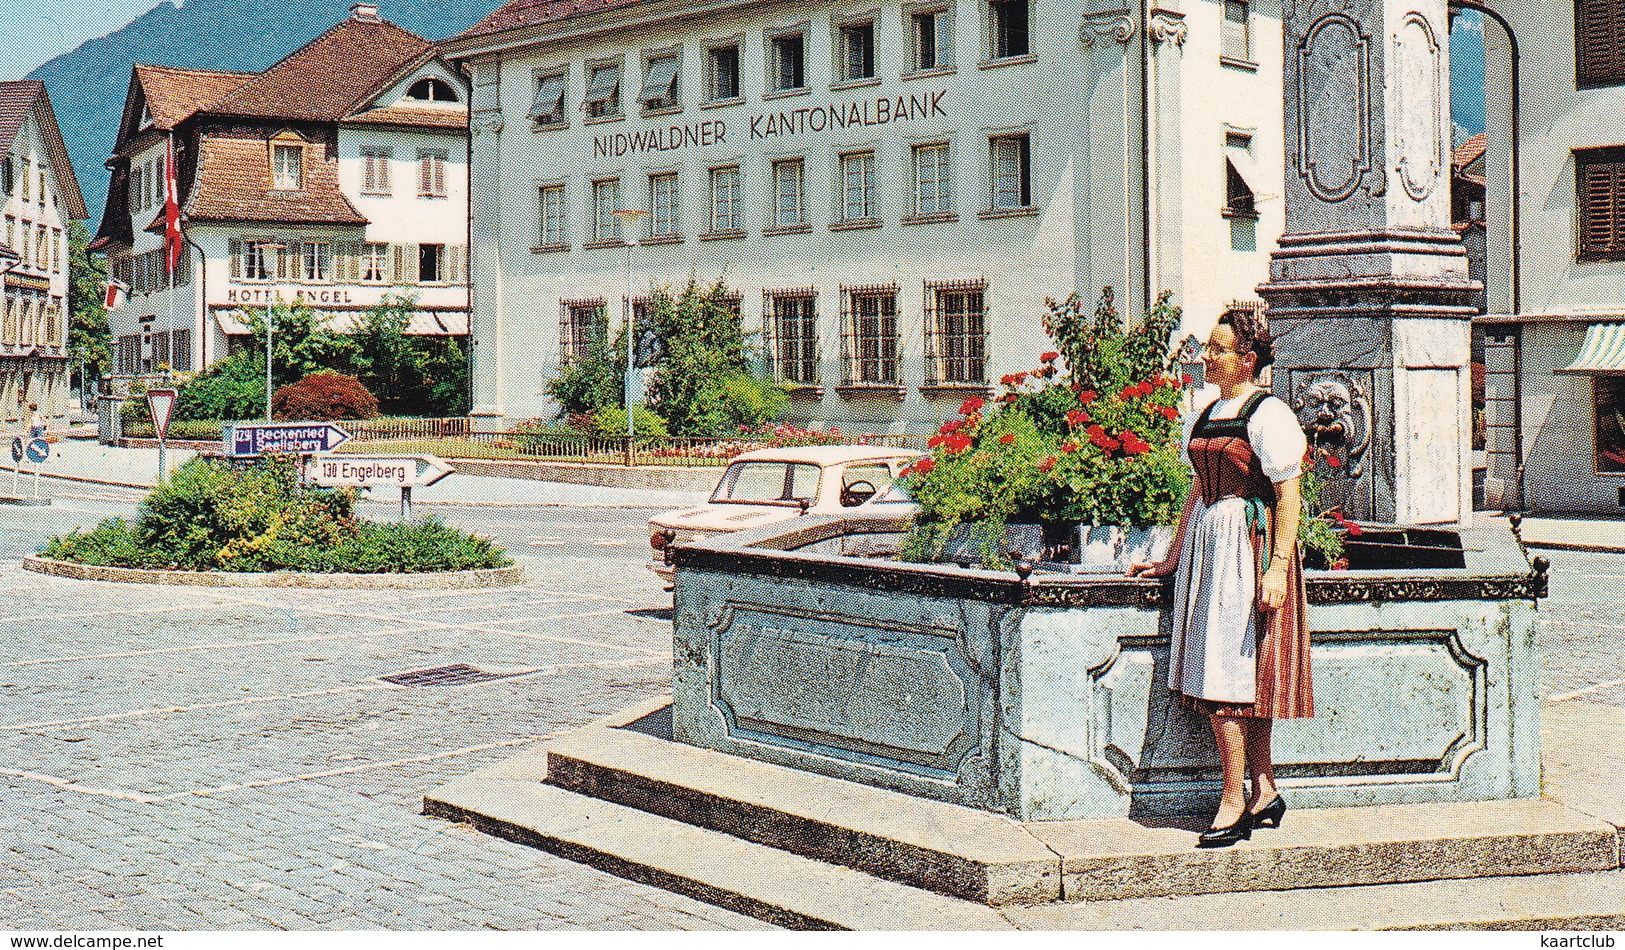 Stans: SIMCA 1000 - Winkelriedbrunnen, 'Nidwaldner Kantonalbank', Dorfplatz - (Suisse/Schweiz) - Toerisme